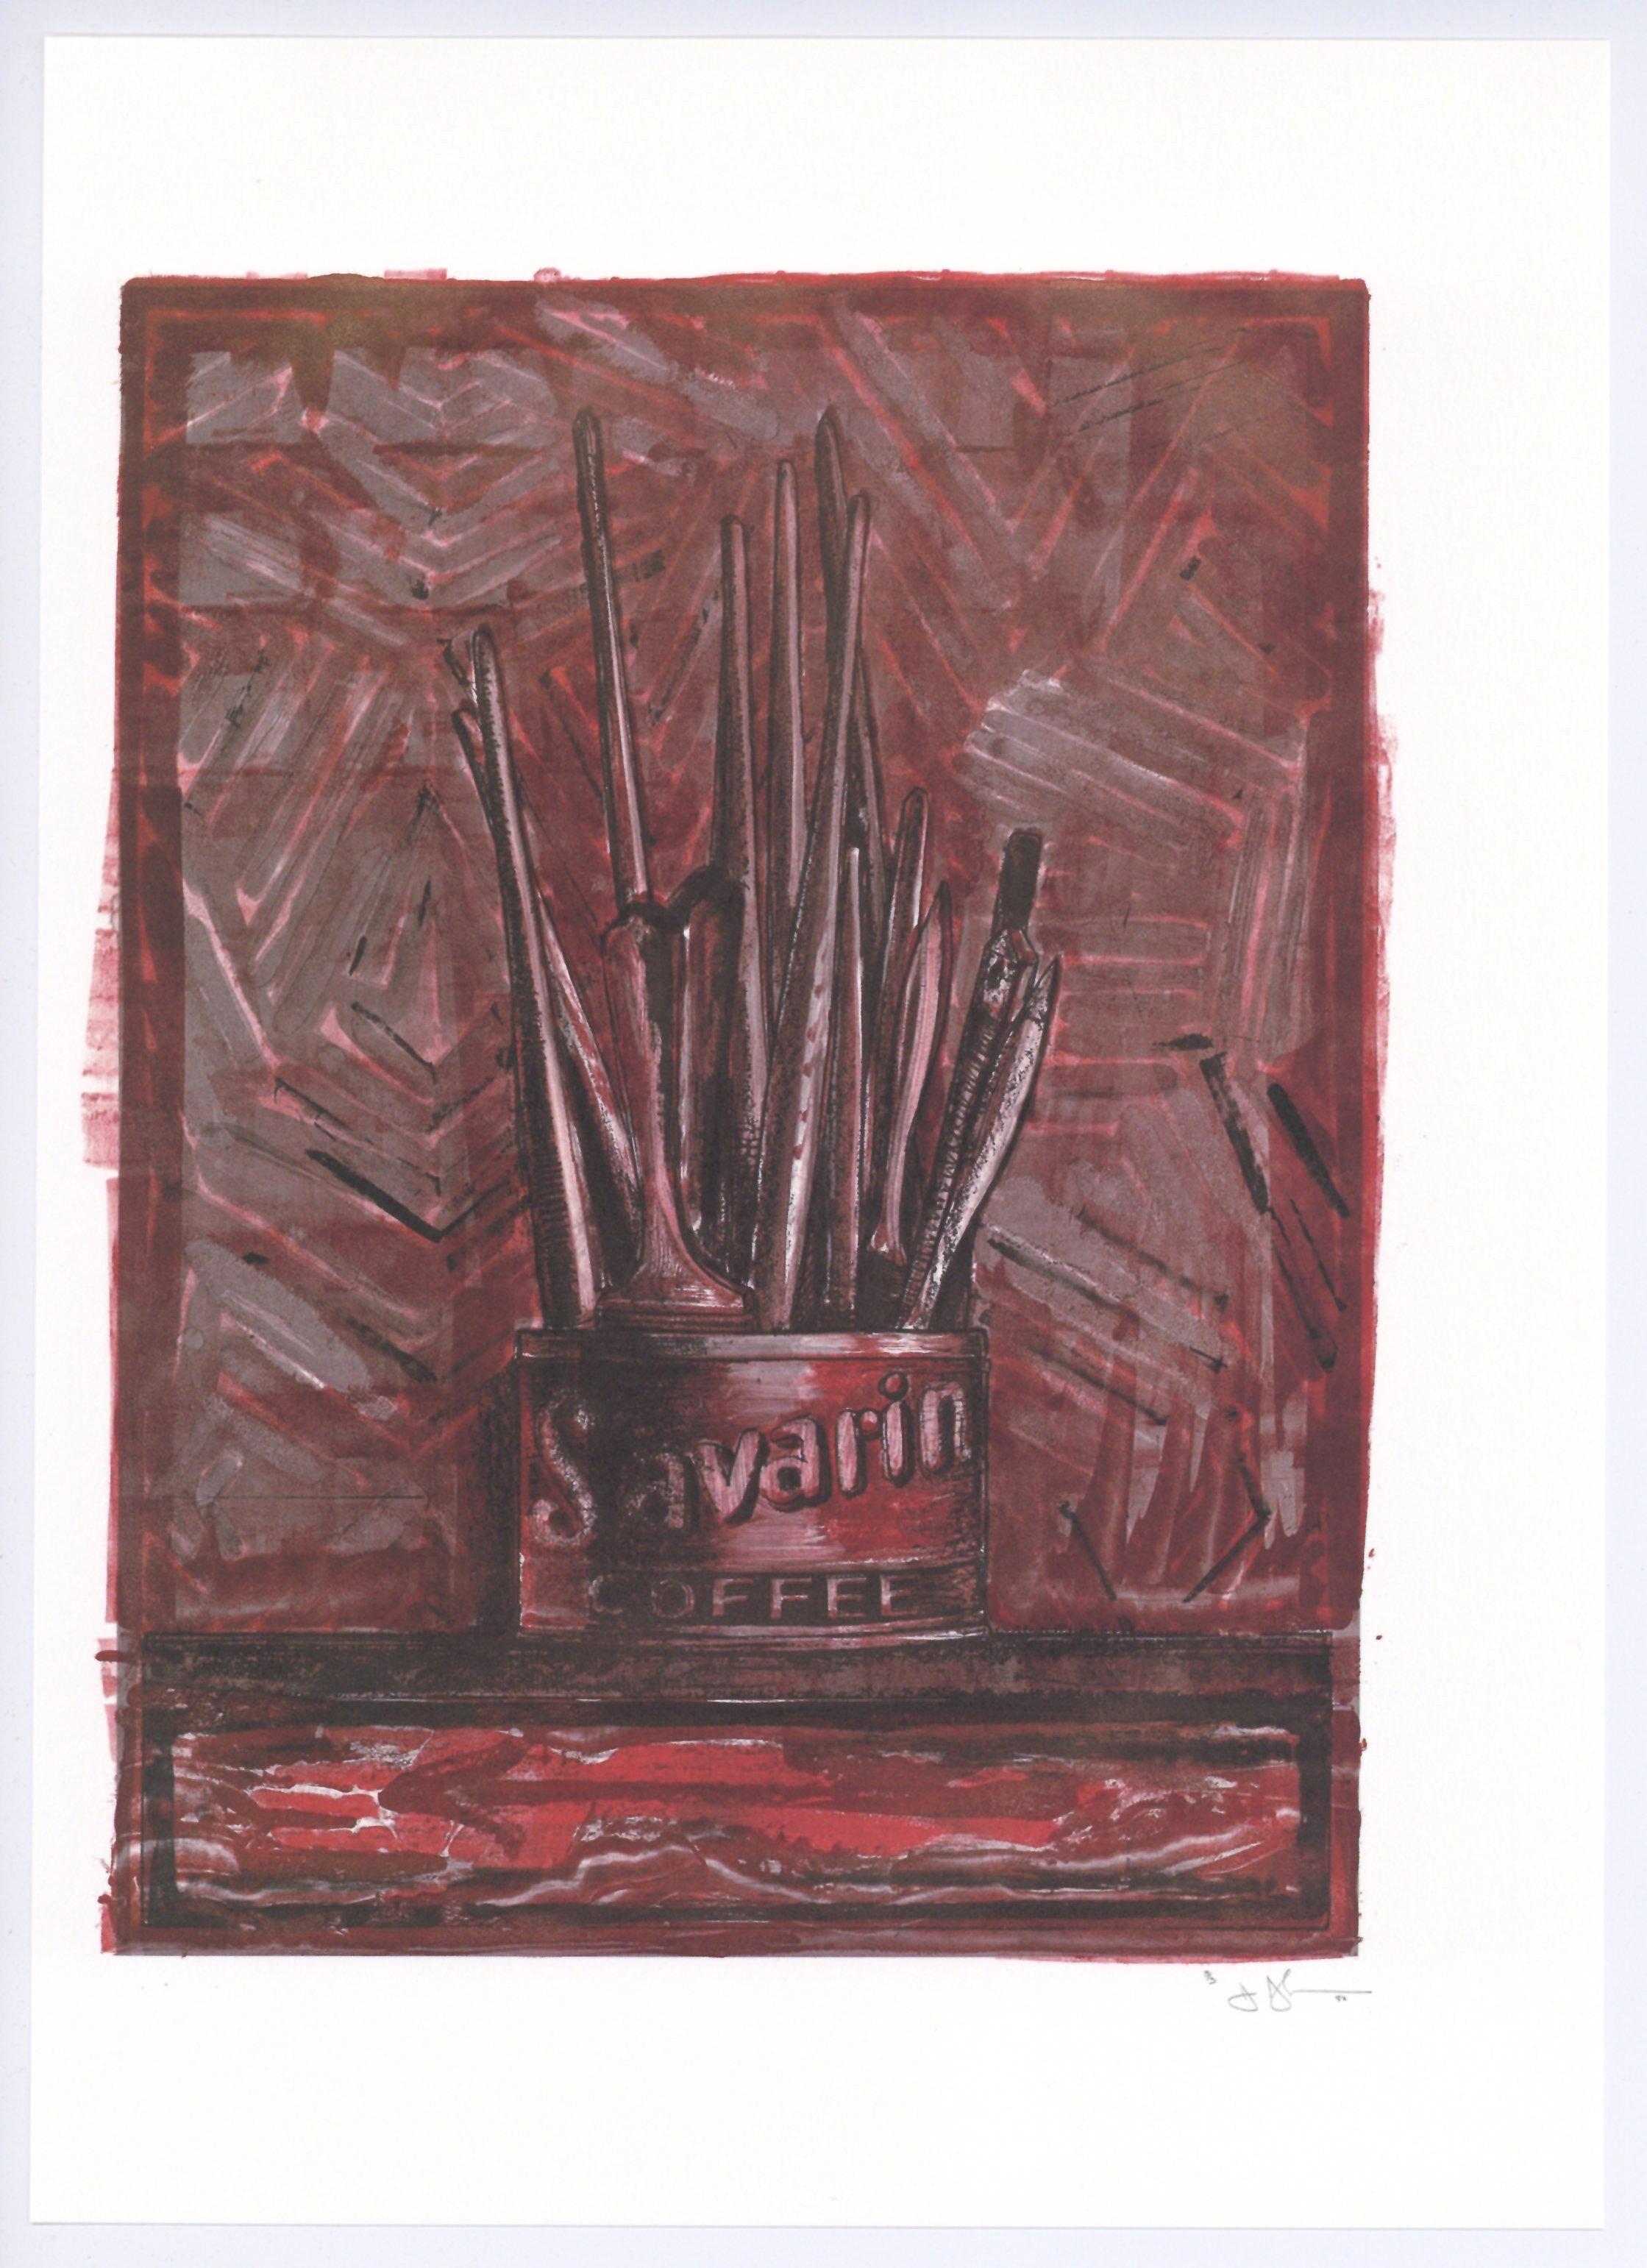 Savarin - Print by (After) Jasper Johns